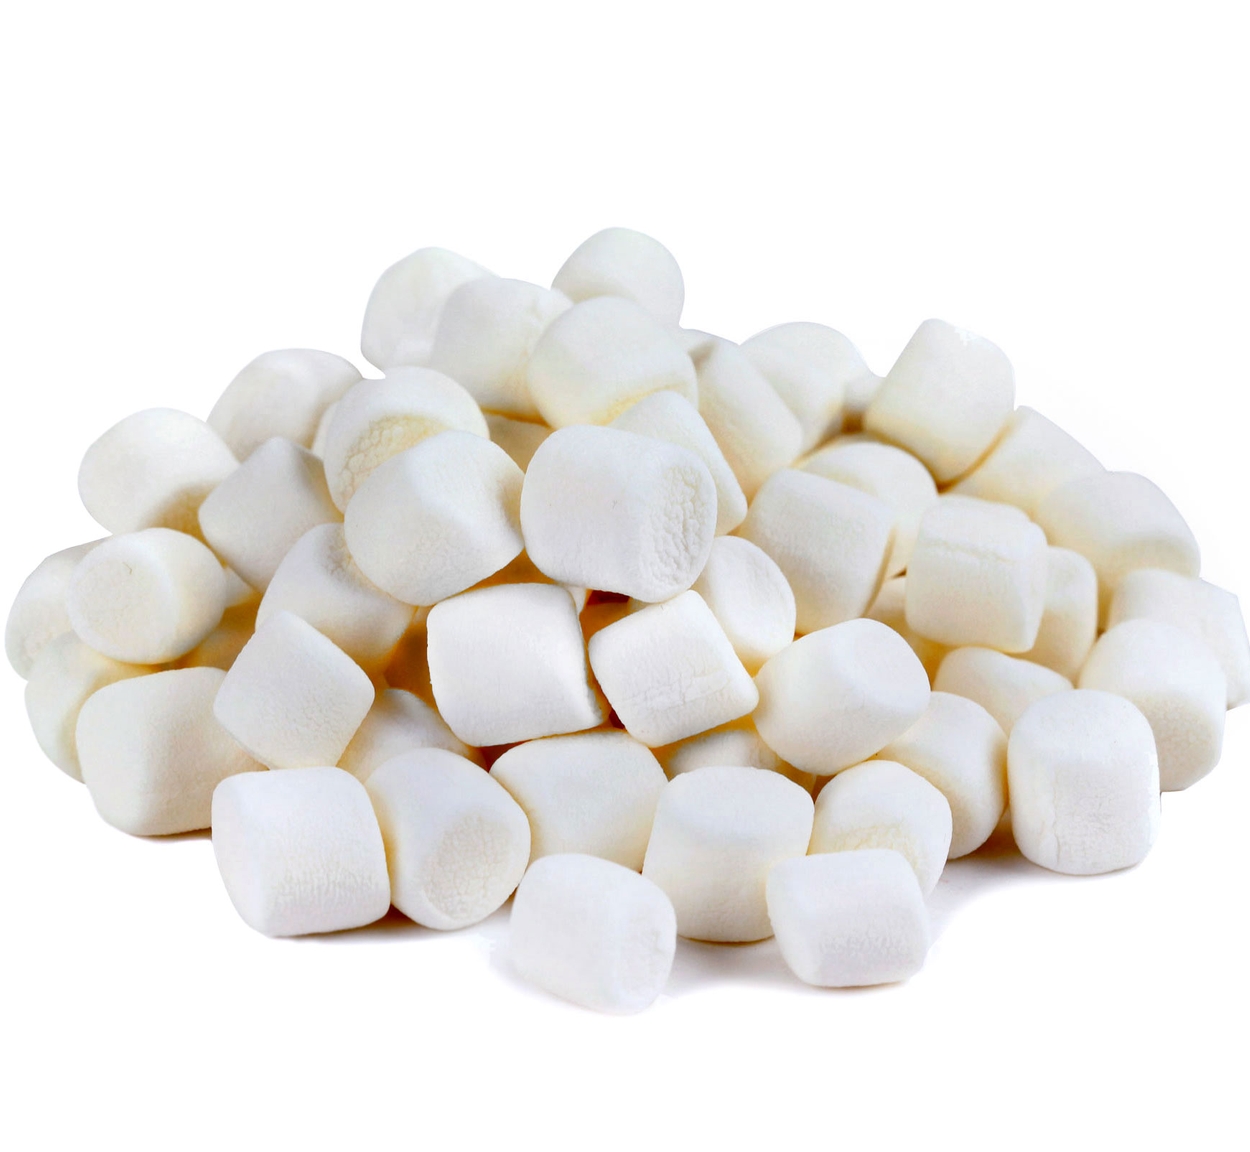 Mini Marshmallows - Kosher White Marshmallow Candy • Oh! Nuts®